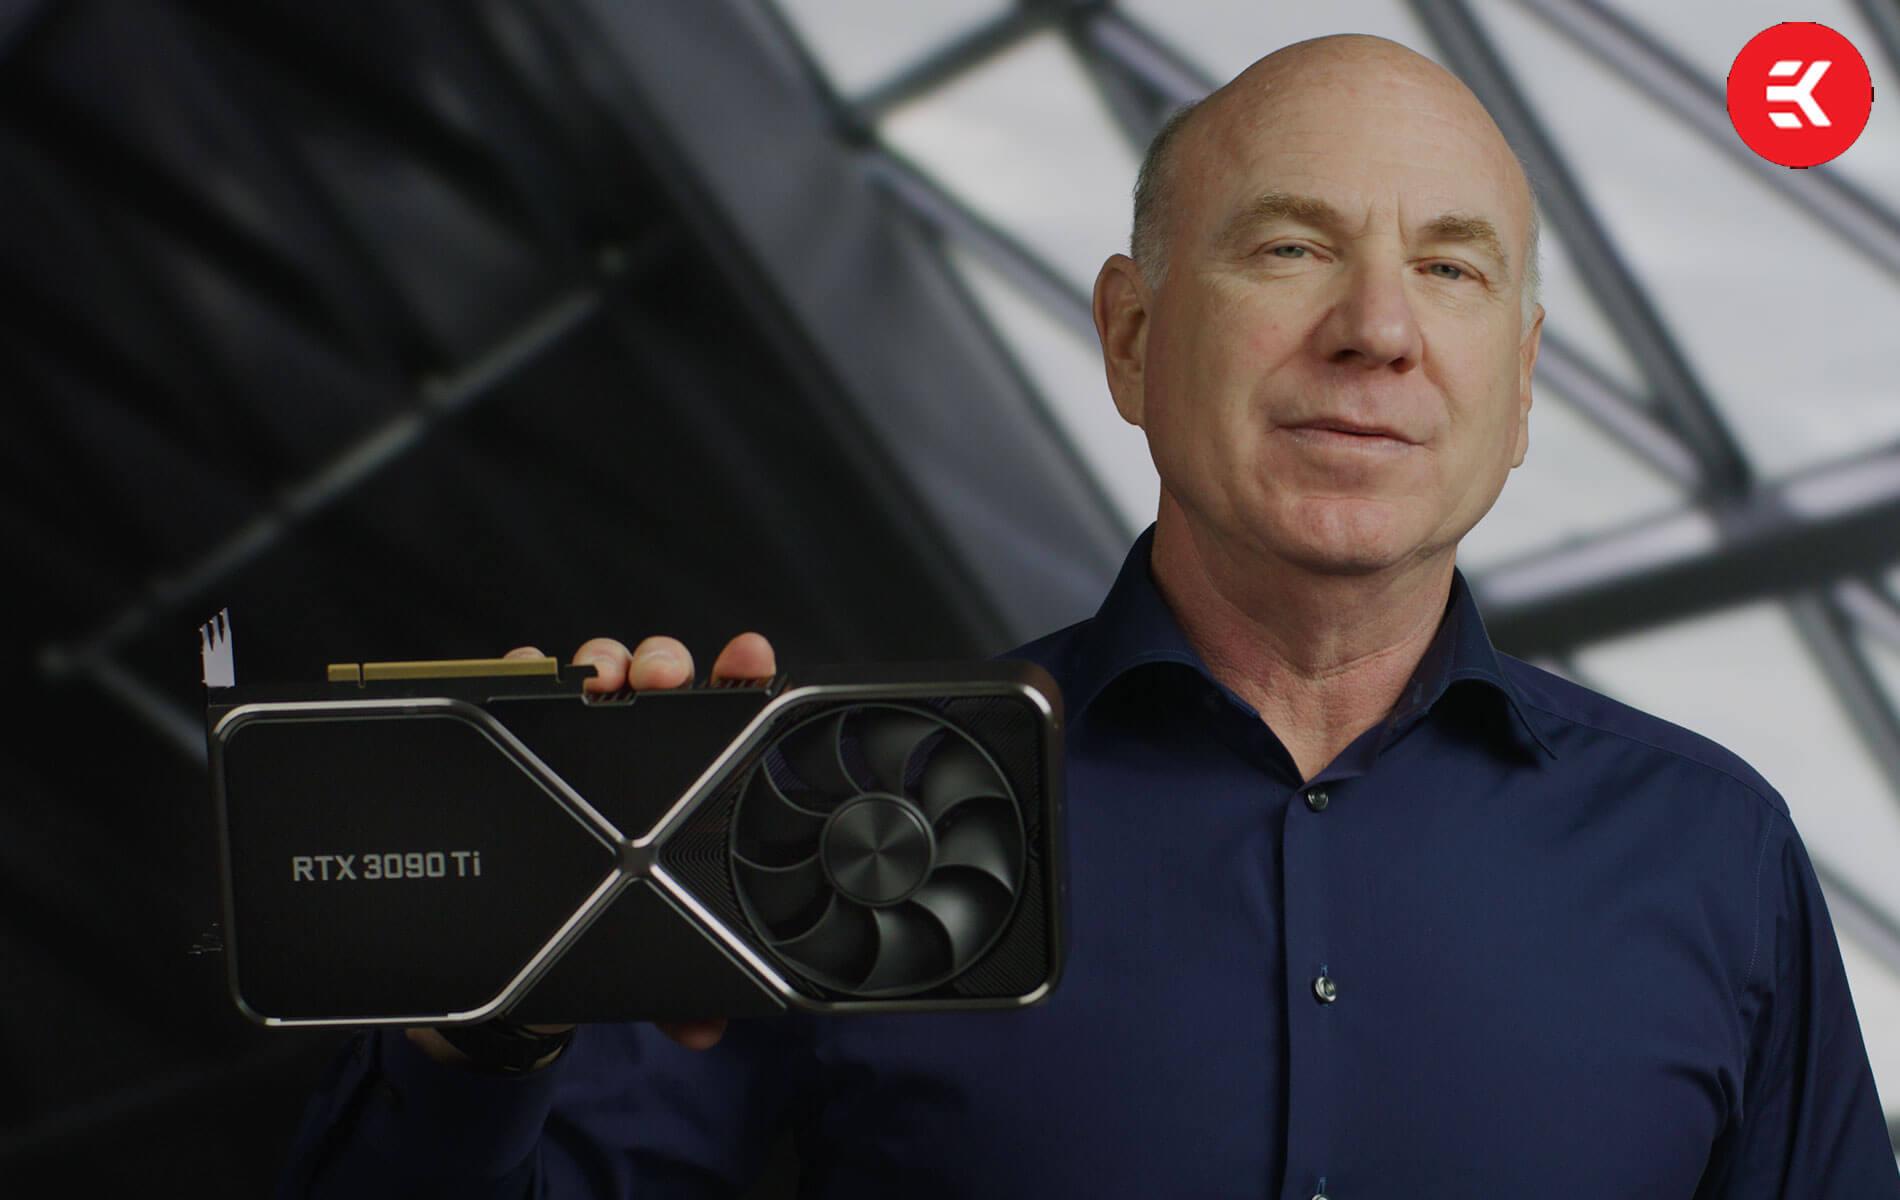 Nvidia’s RTX 3090 Ti GPU: Everything We Know So Far